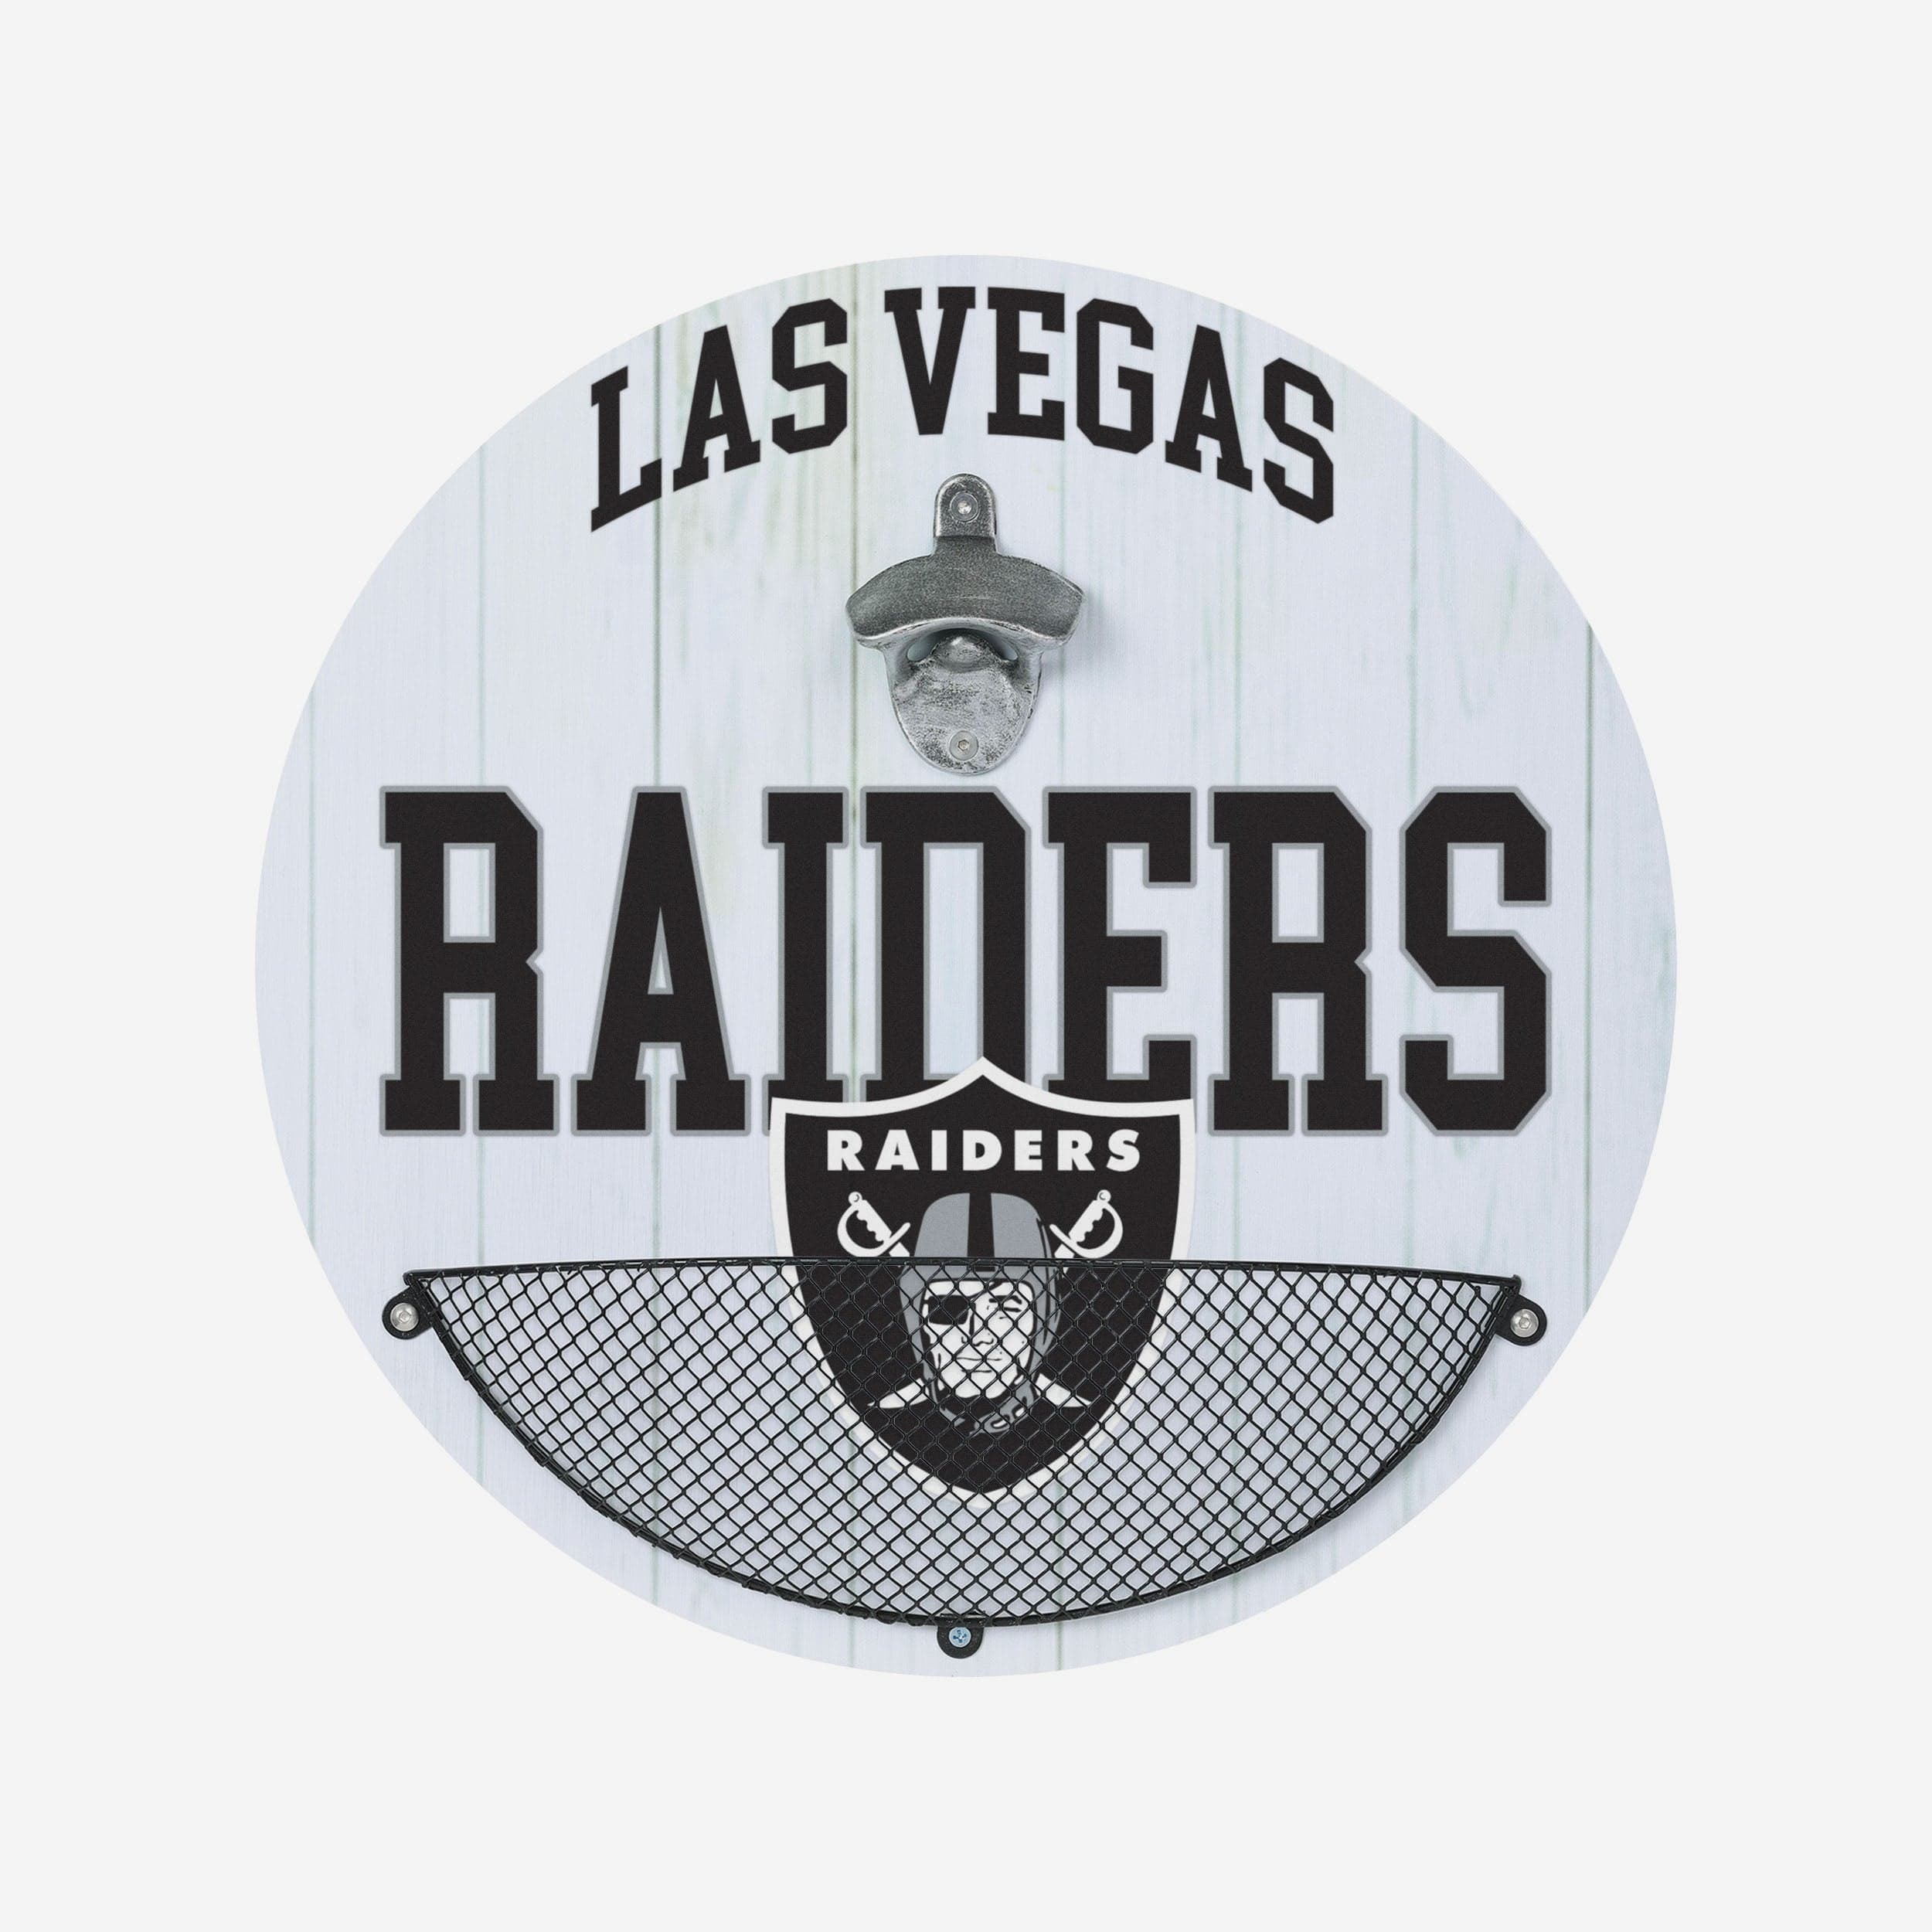 Las Vegas Raiders install checkout-free stores at home stadium